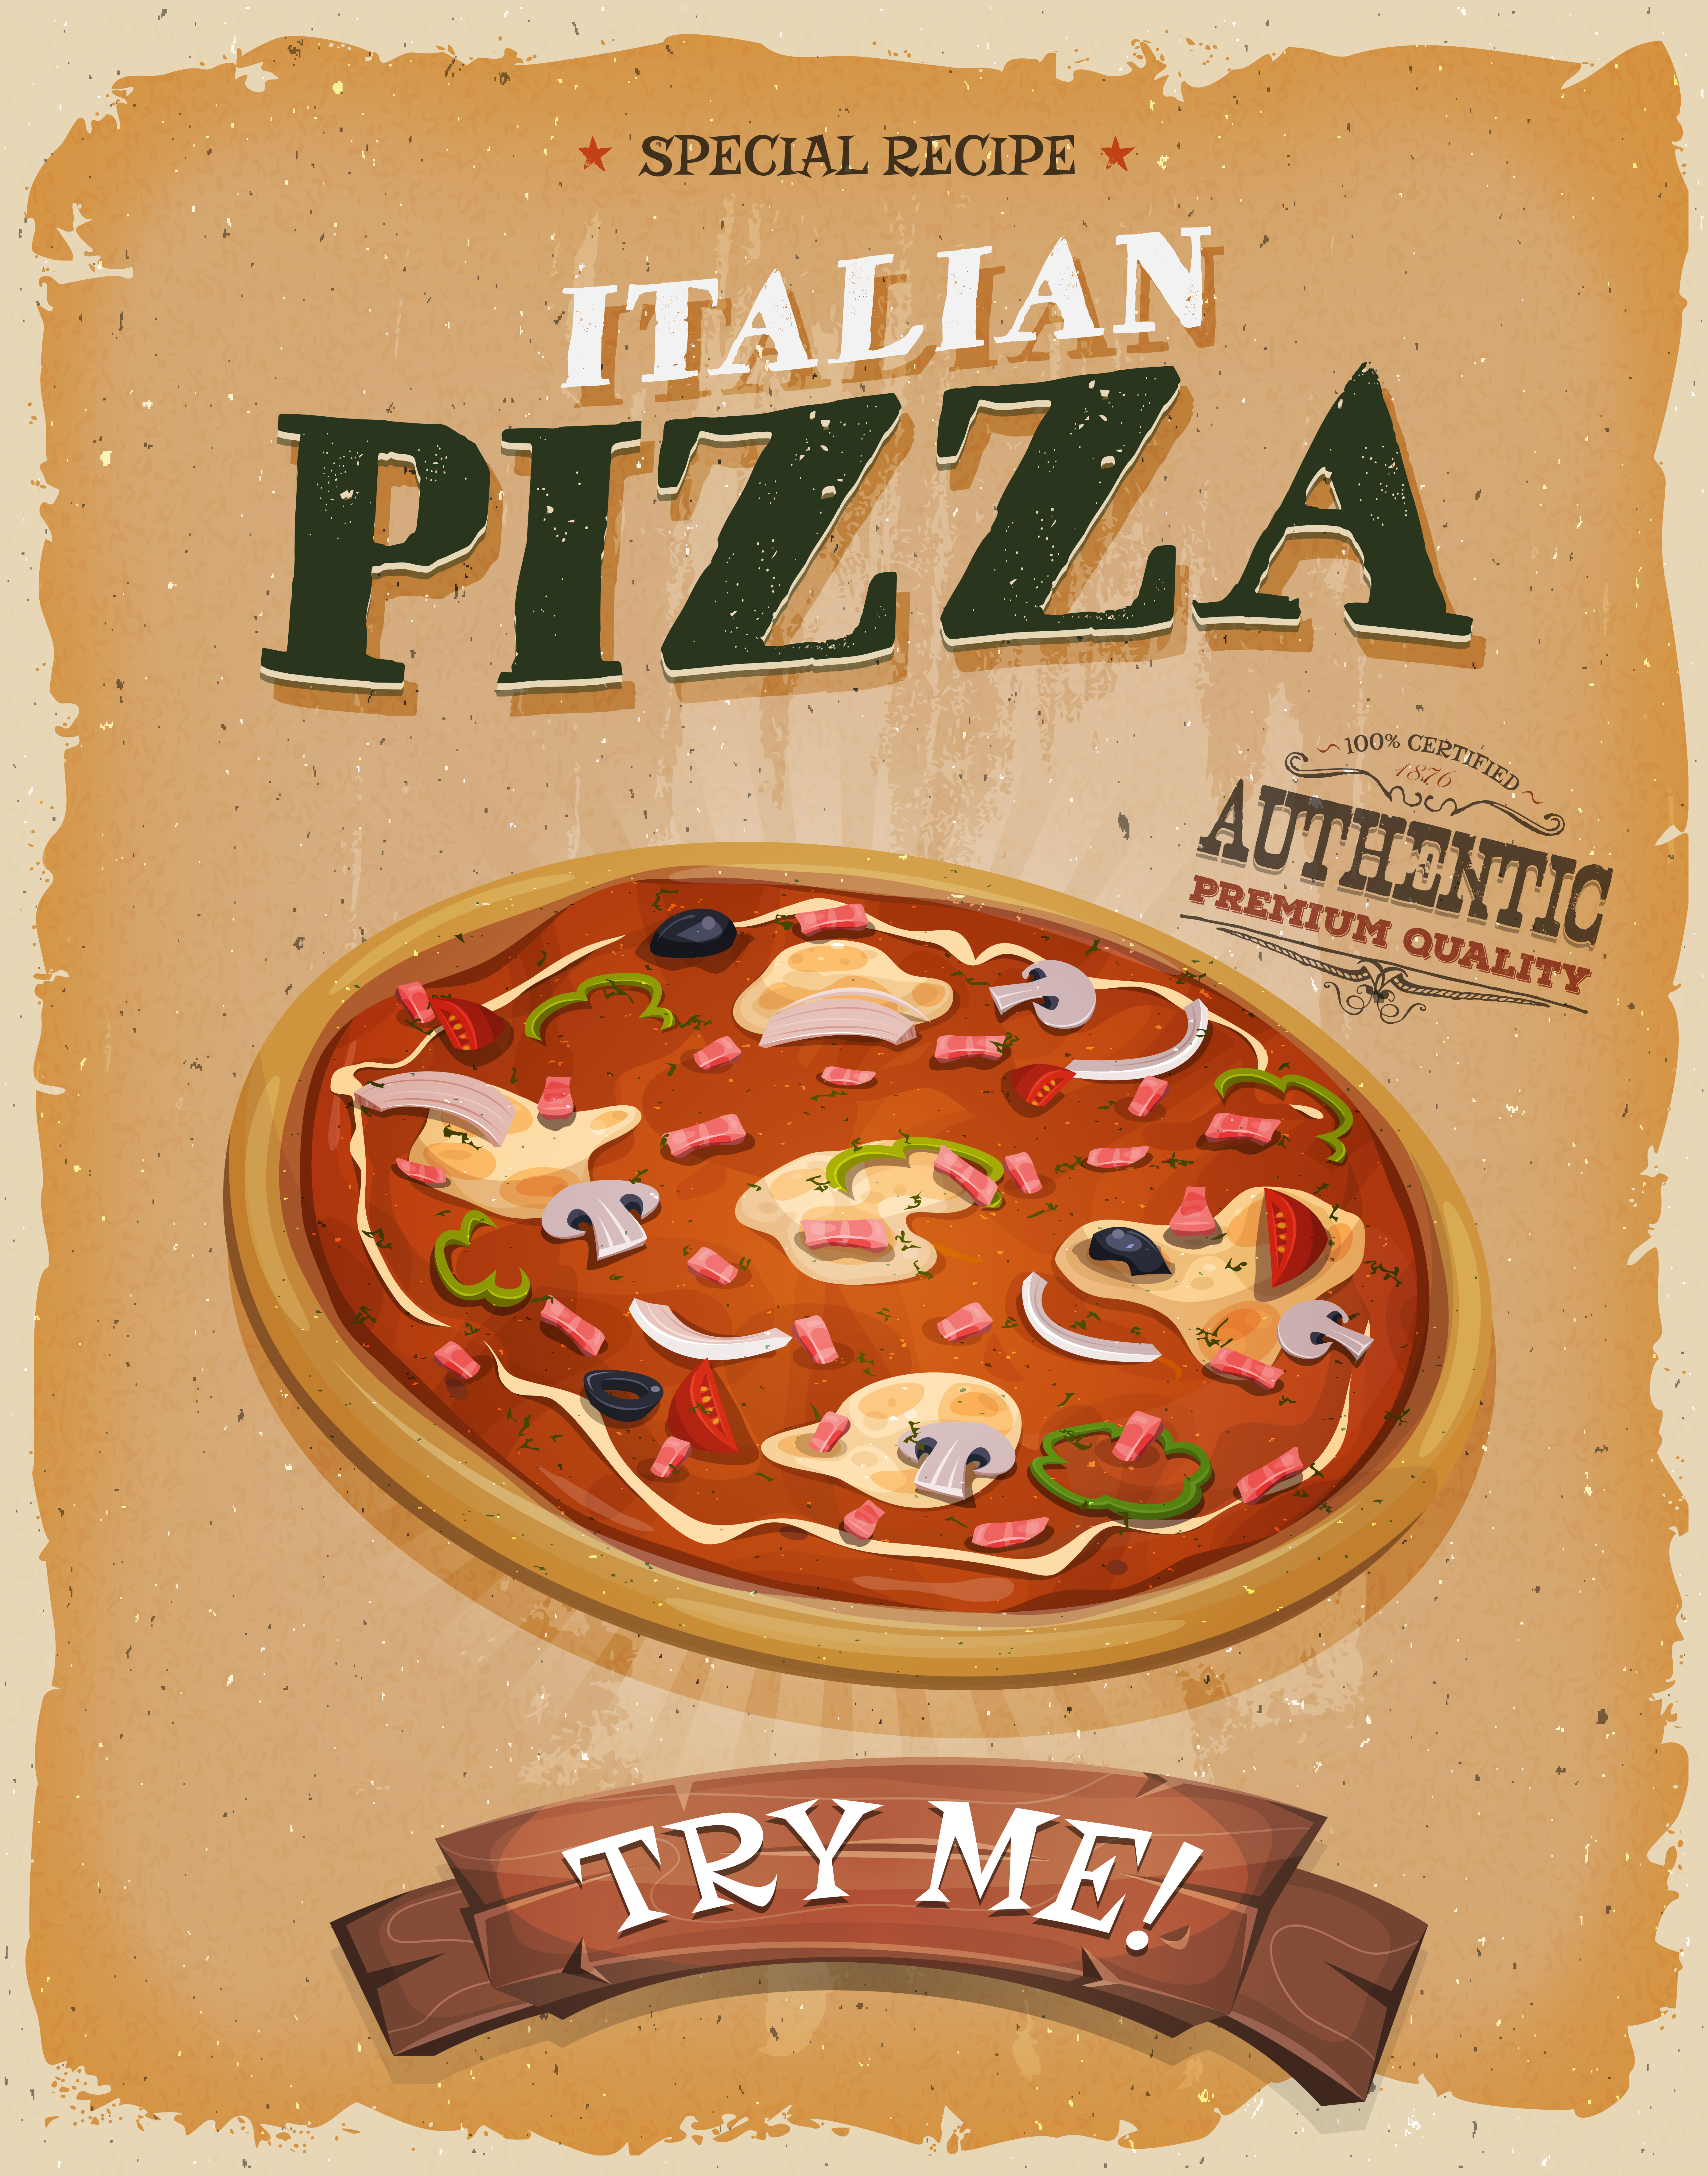 Pizzeria Poster 